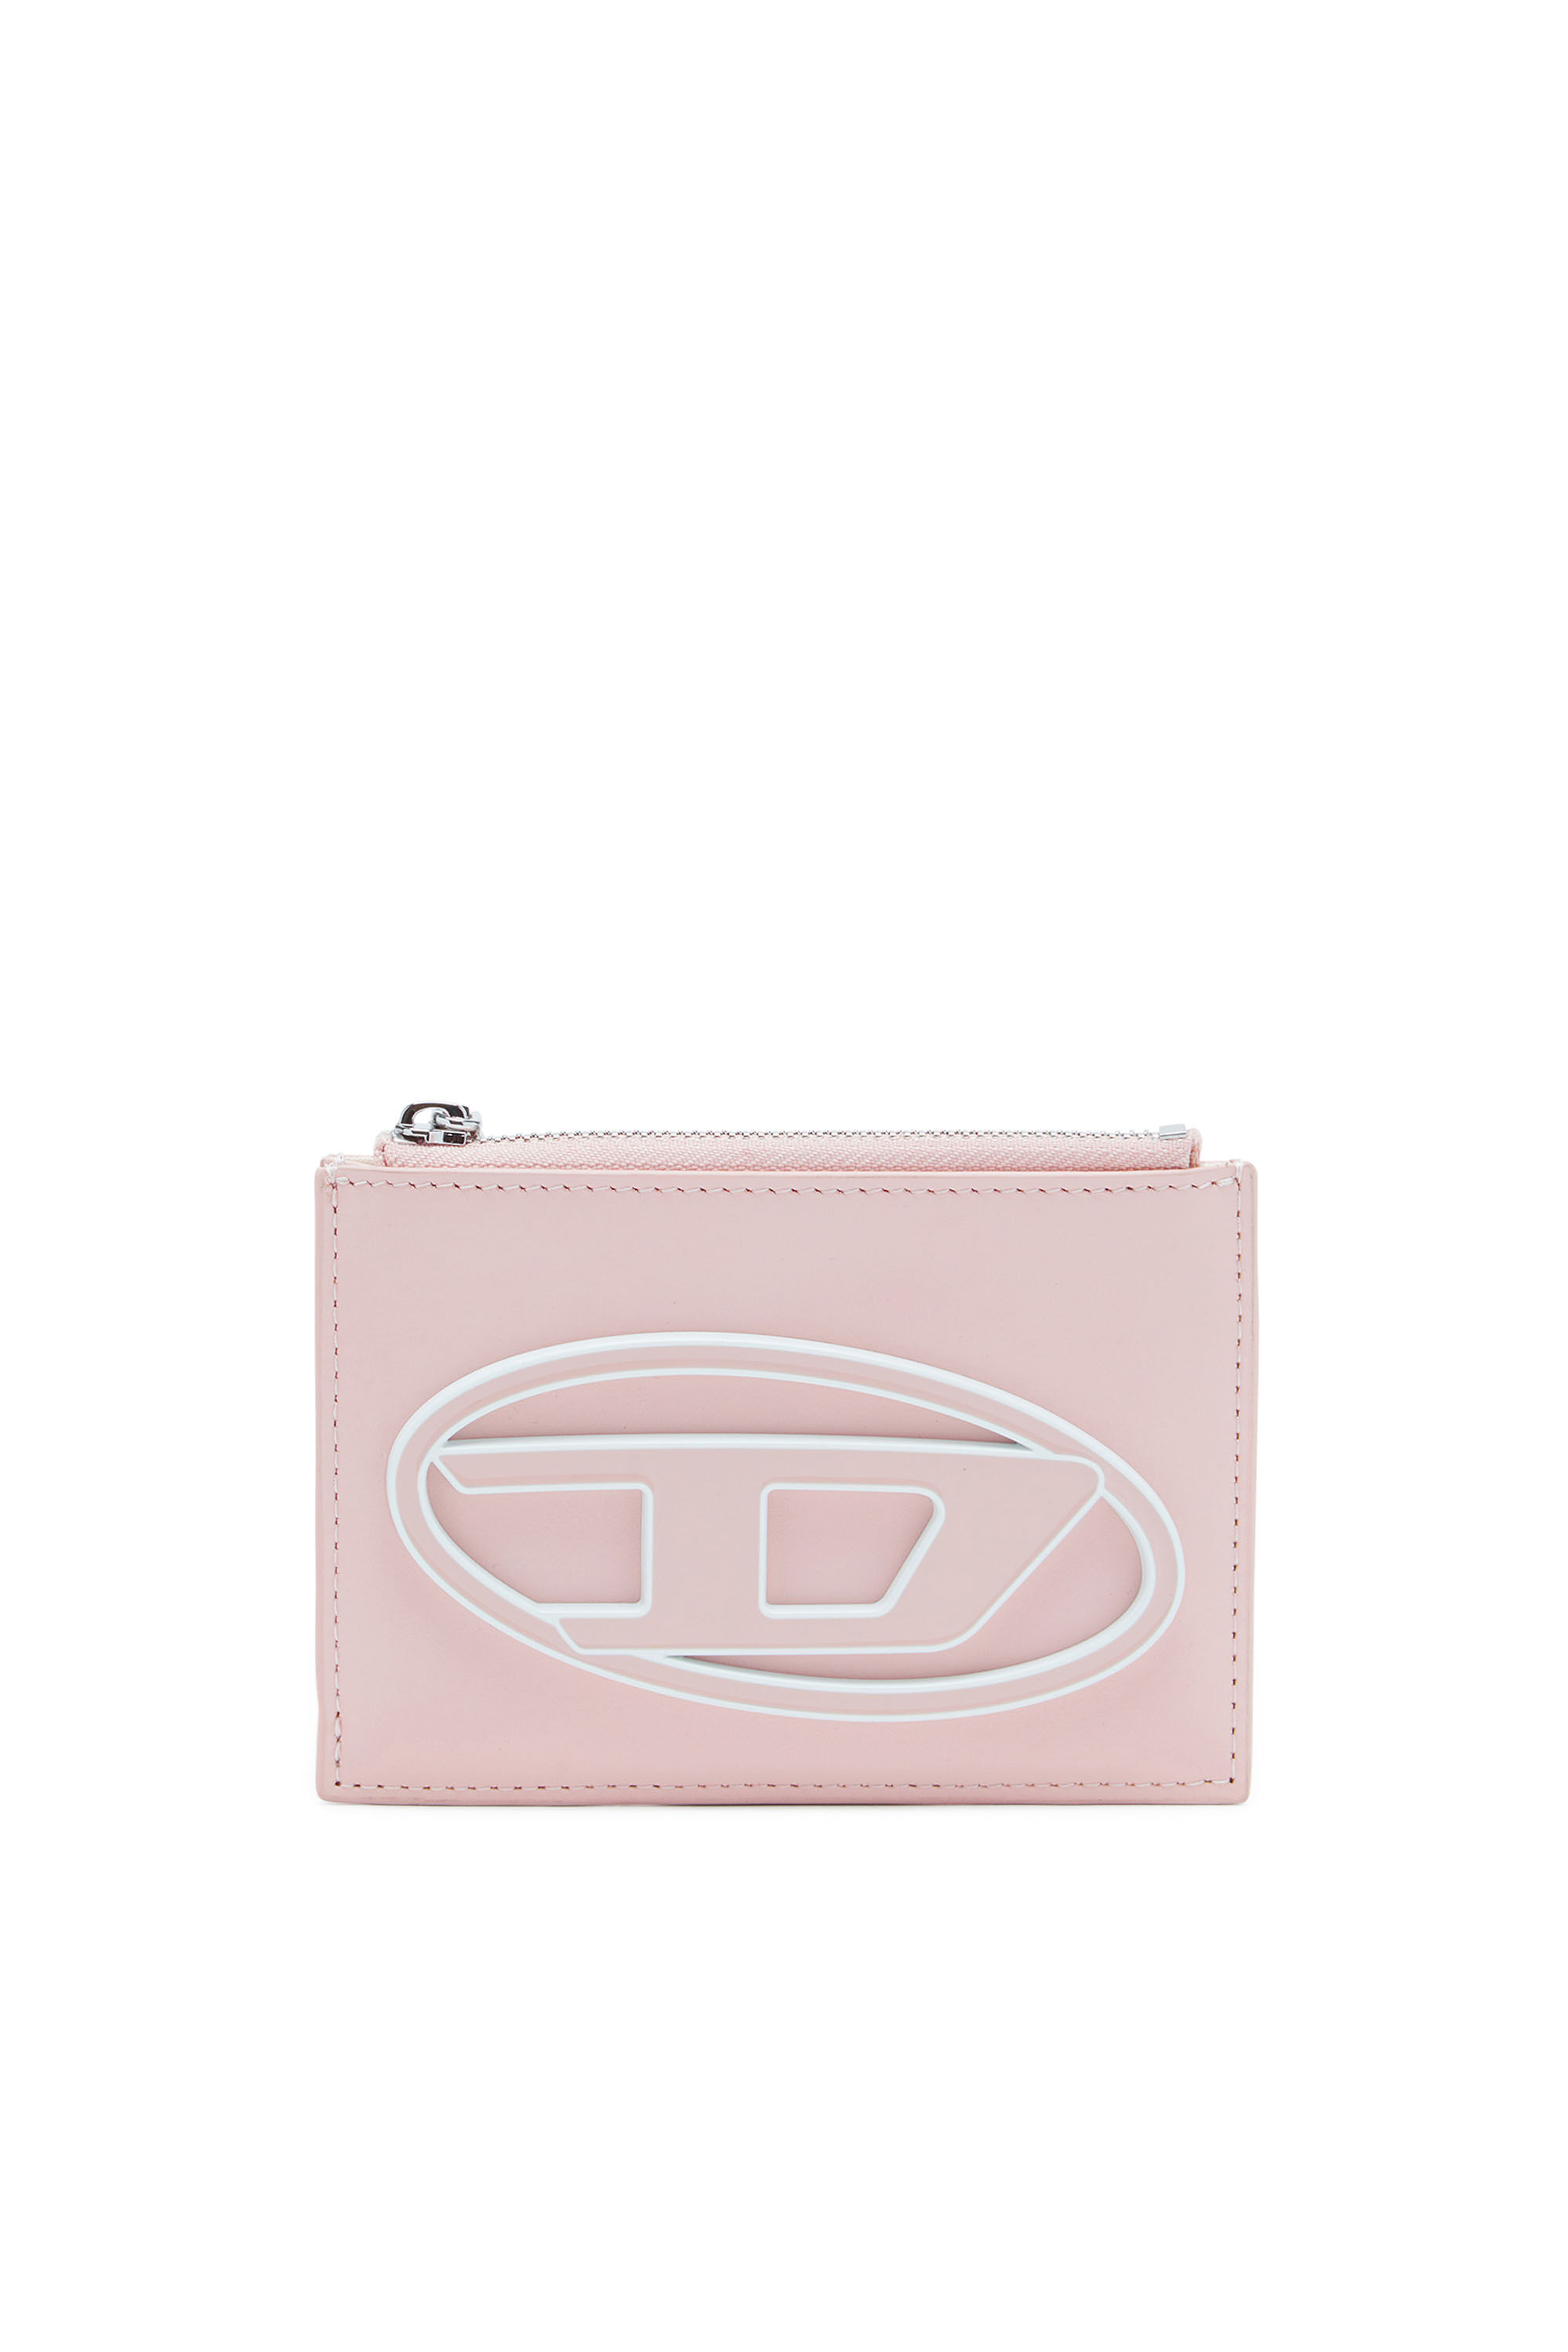 Diesel - 1DR CARD HOLDER I, Damen Kartenetui aus pastellfarbenem Leder in Rosa - Image 1